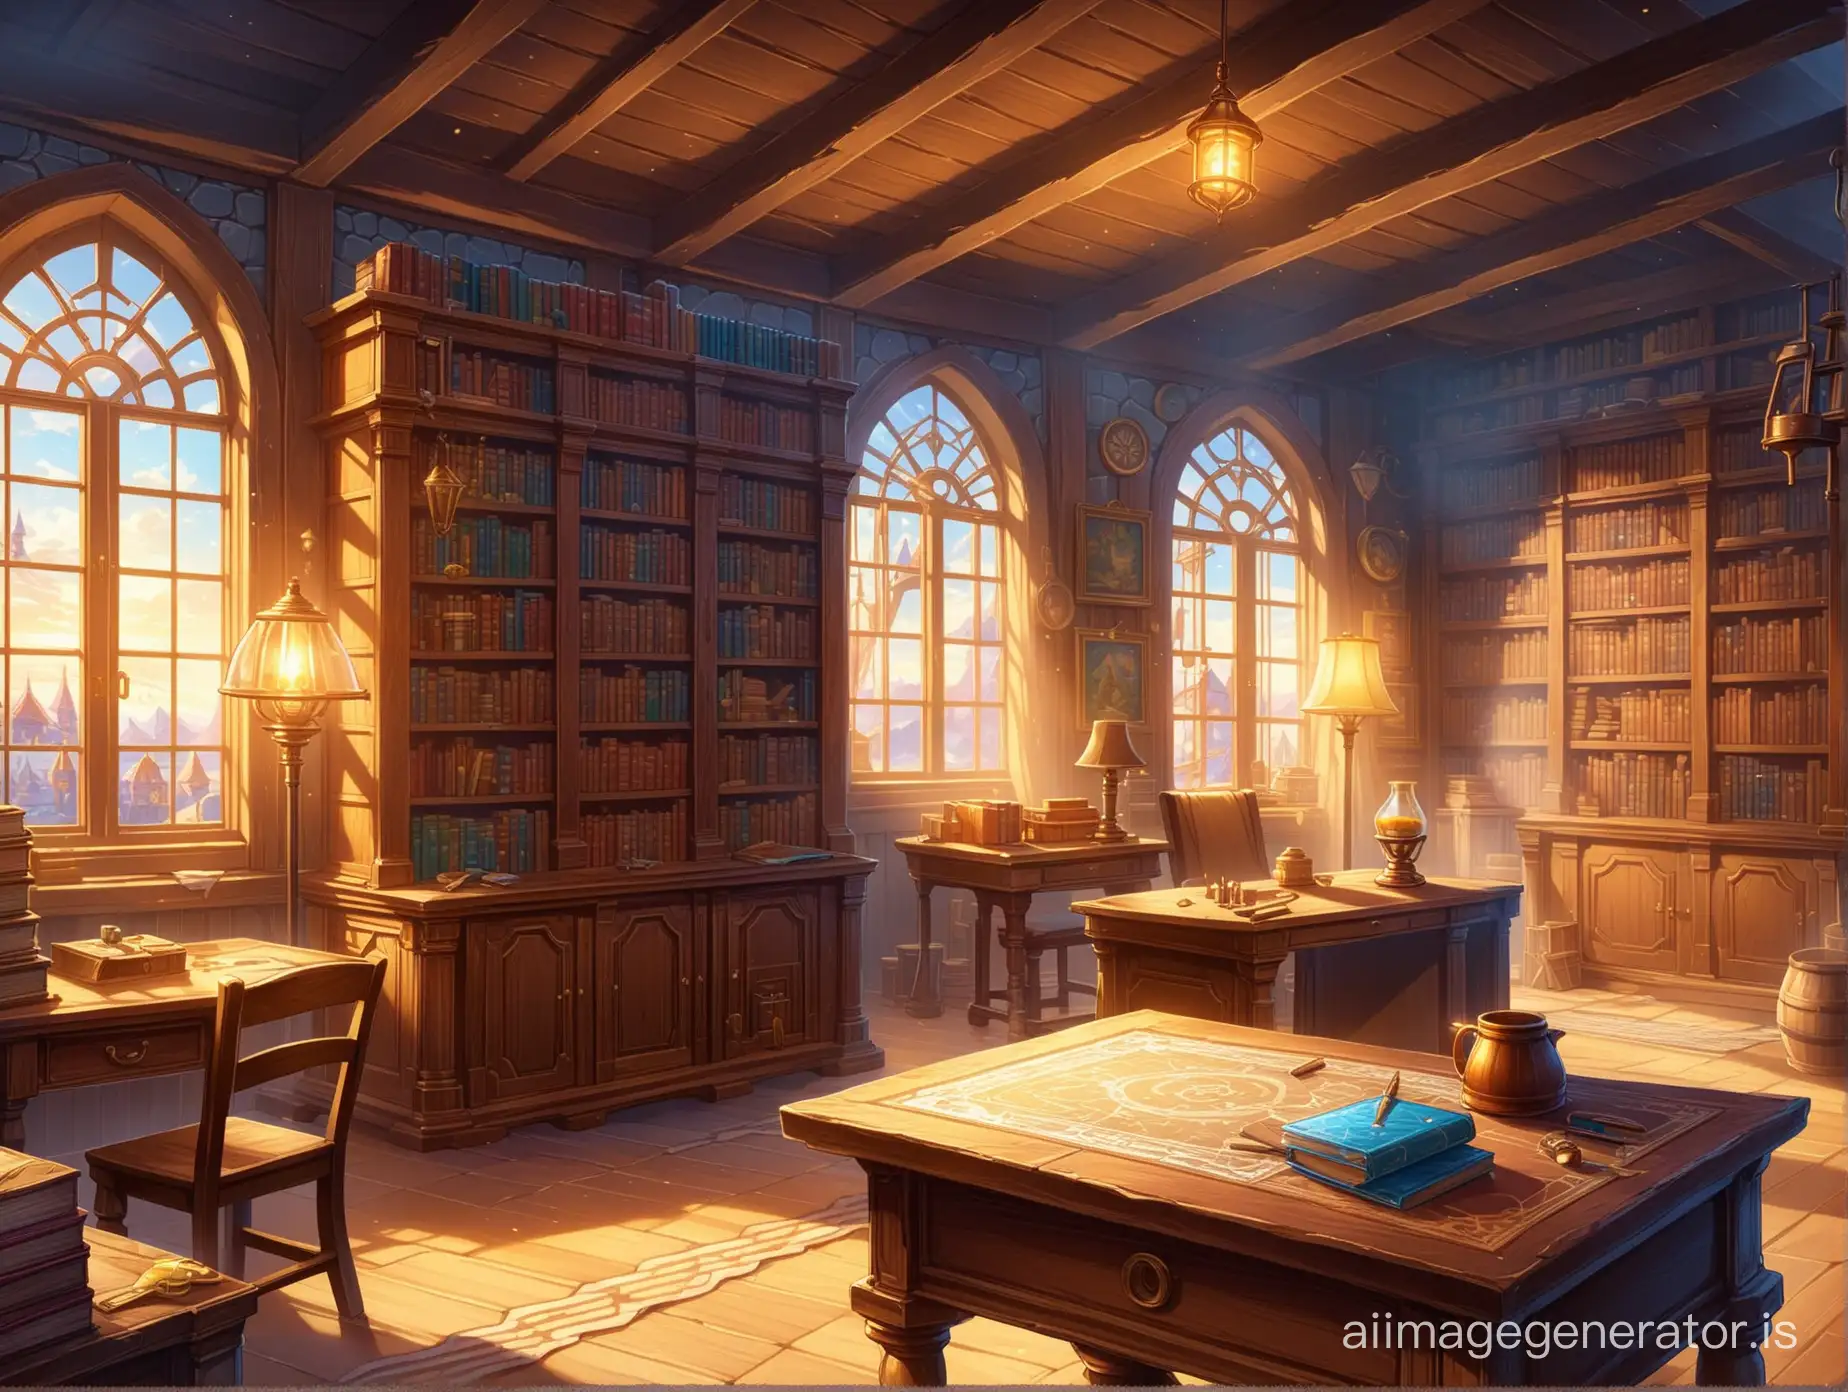 Cluttered-Desk-Interior-Background-Art-Highly-Detailed-Alchemist-Library-Scene